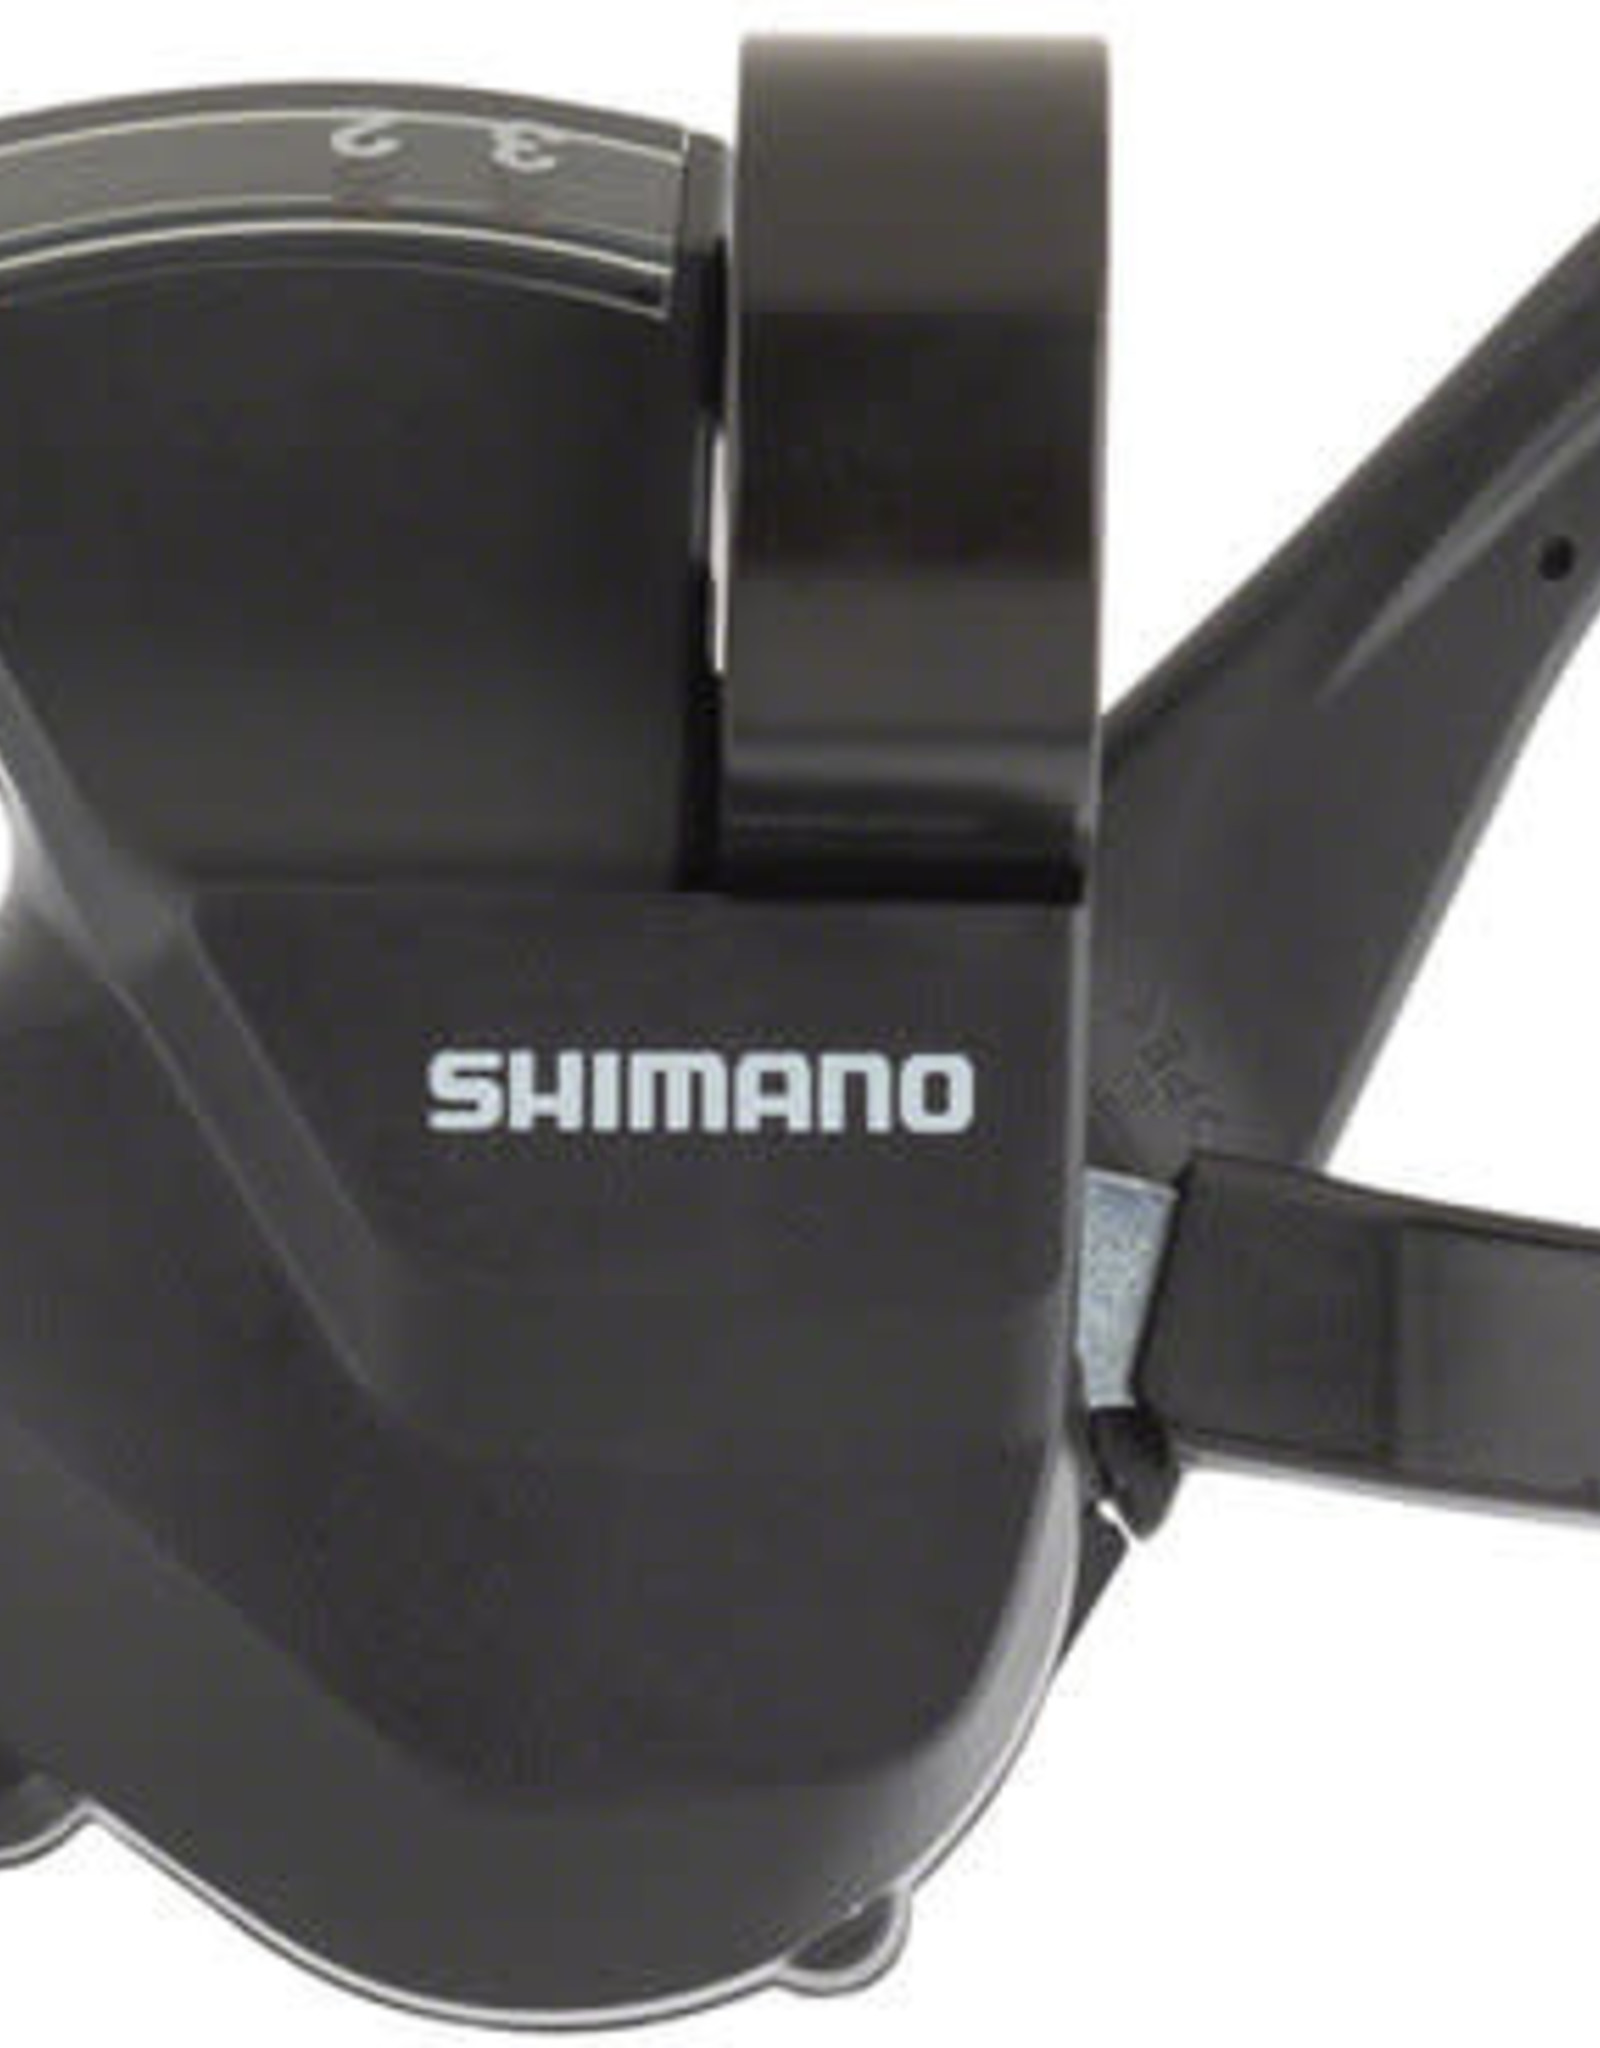 Shimano SHIFT LEVER, SL-M315-L, LEFT, 3-SPEED RAPIDFIRE PLUS 1800MM